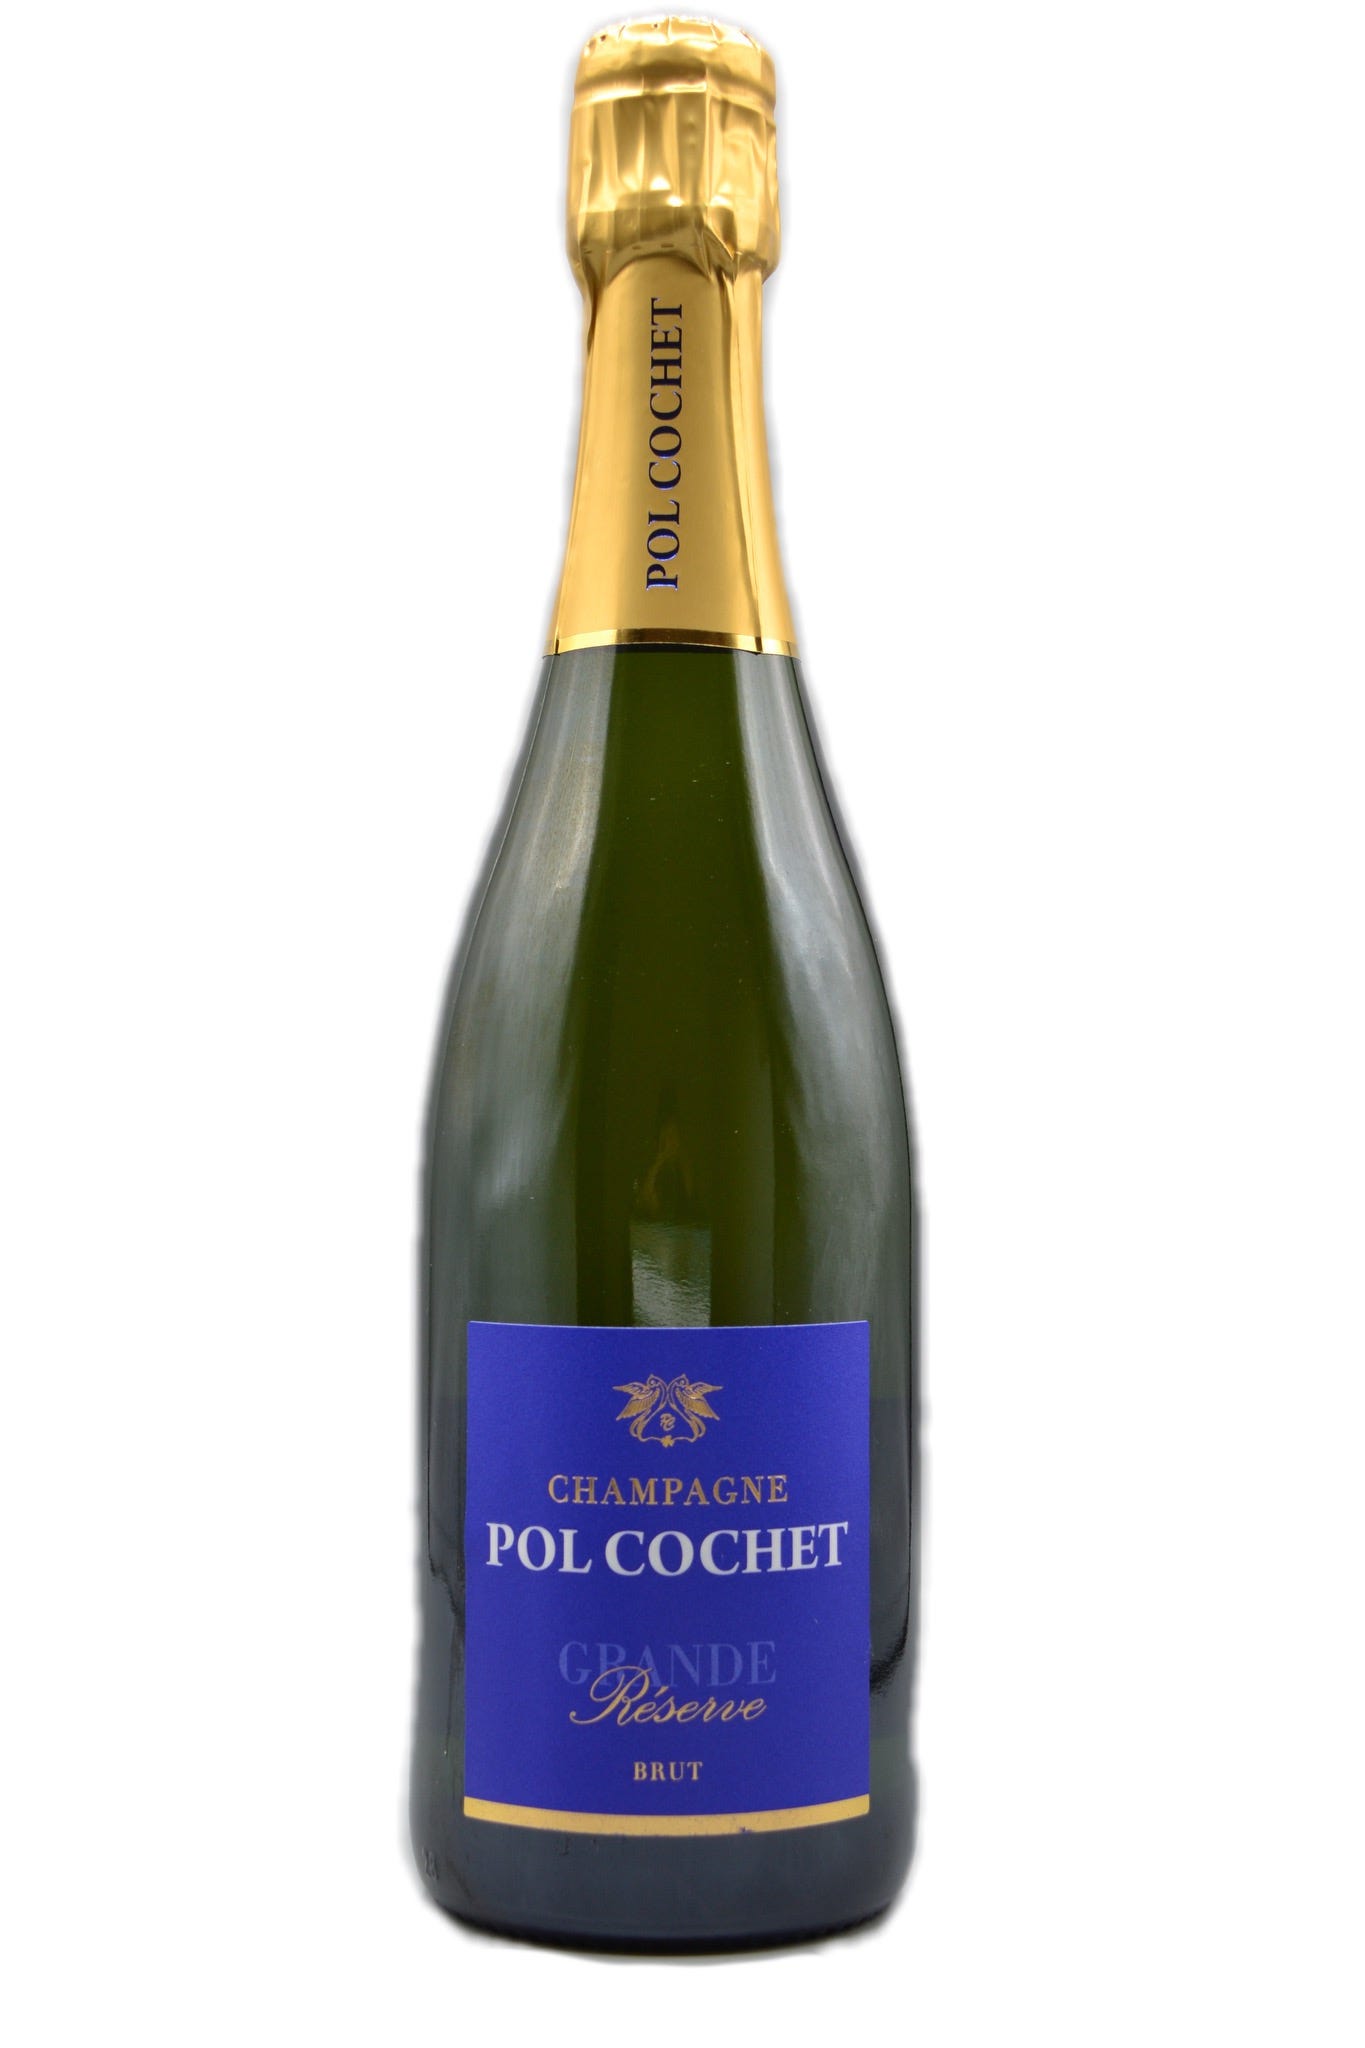 Champagne Pol Cochet brut